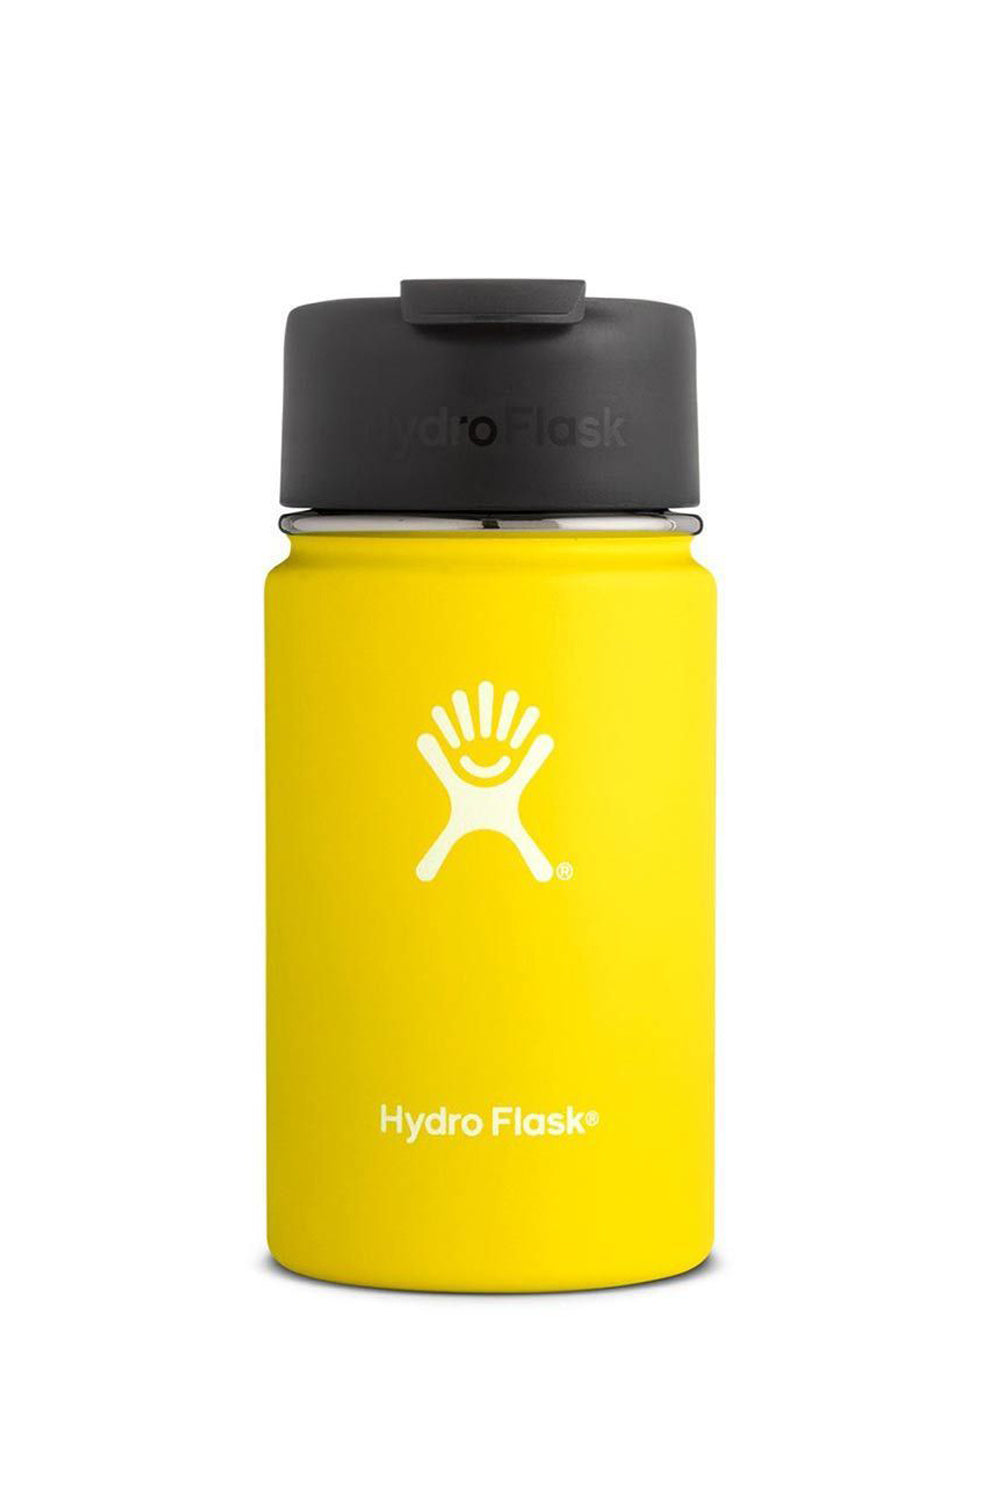 Hydro Flask 12oz (355 ml) Coffee Cup